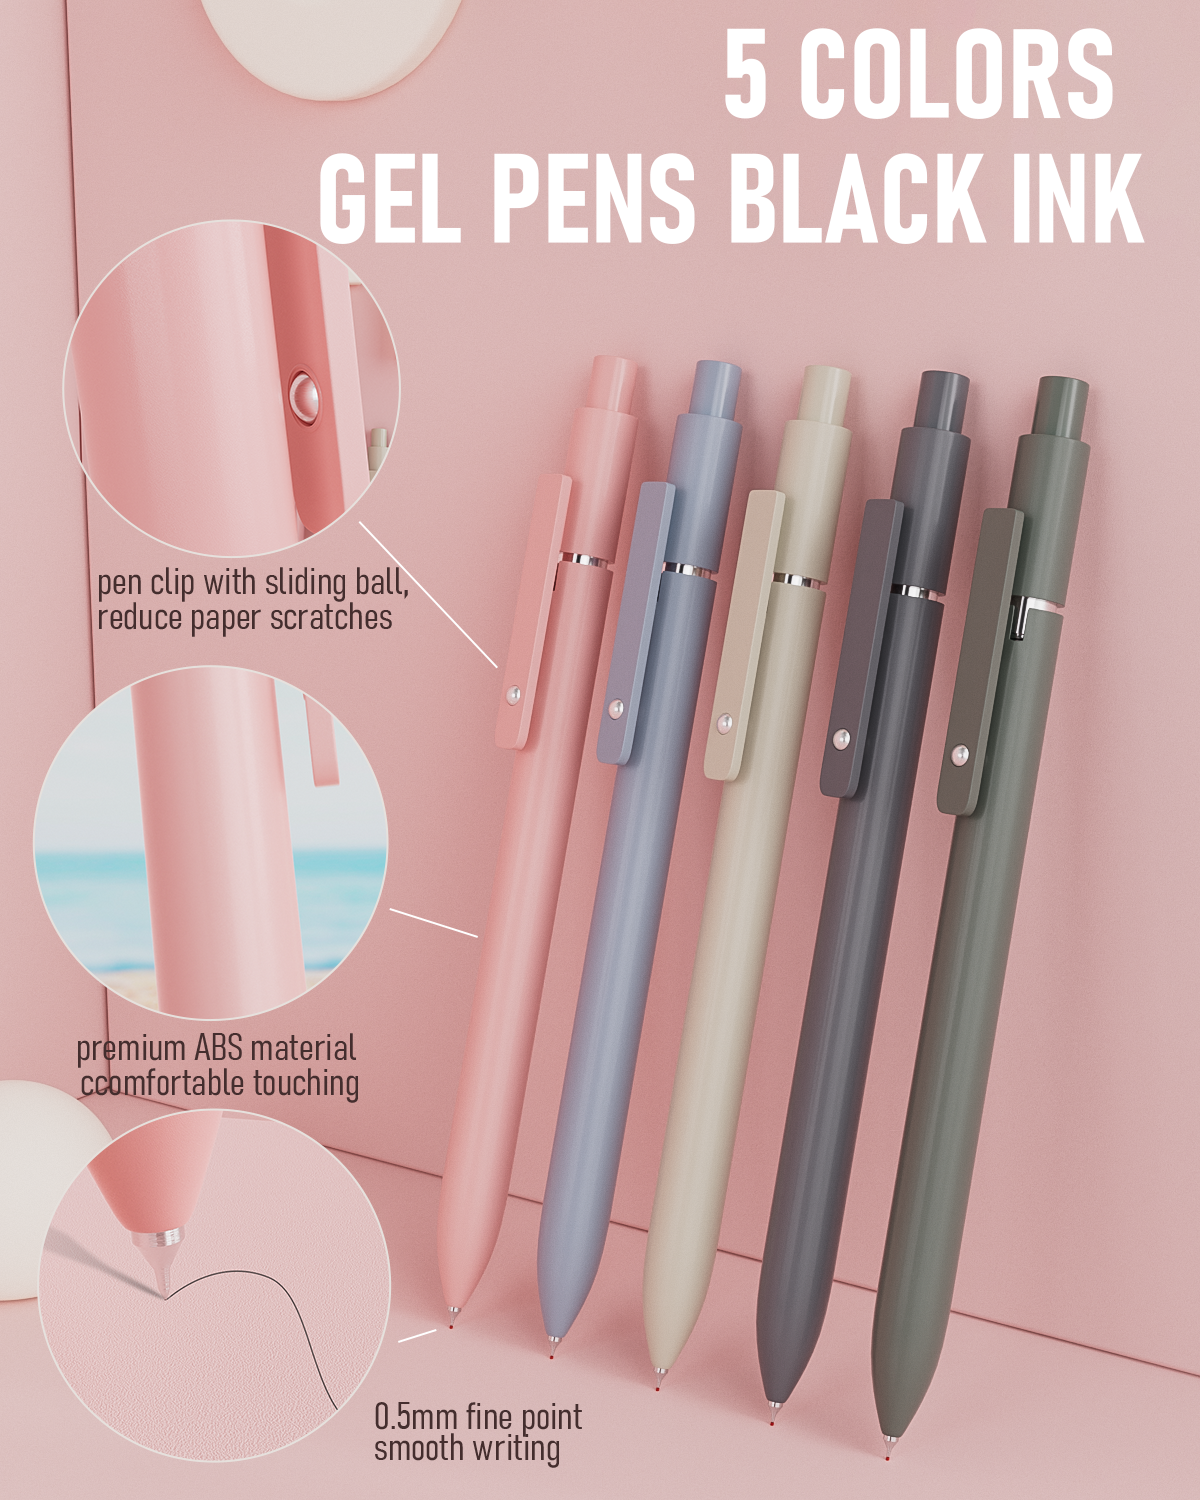 12 Gel Highlighter & 12 Pens with Sharpener Combo Set